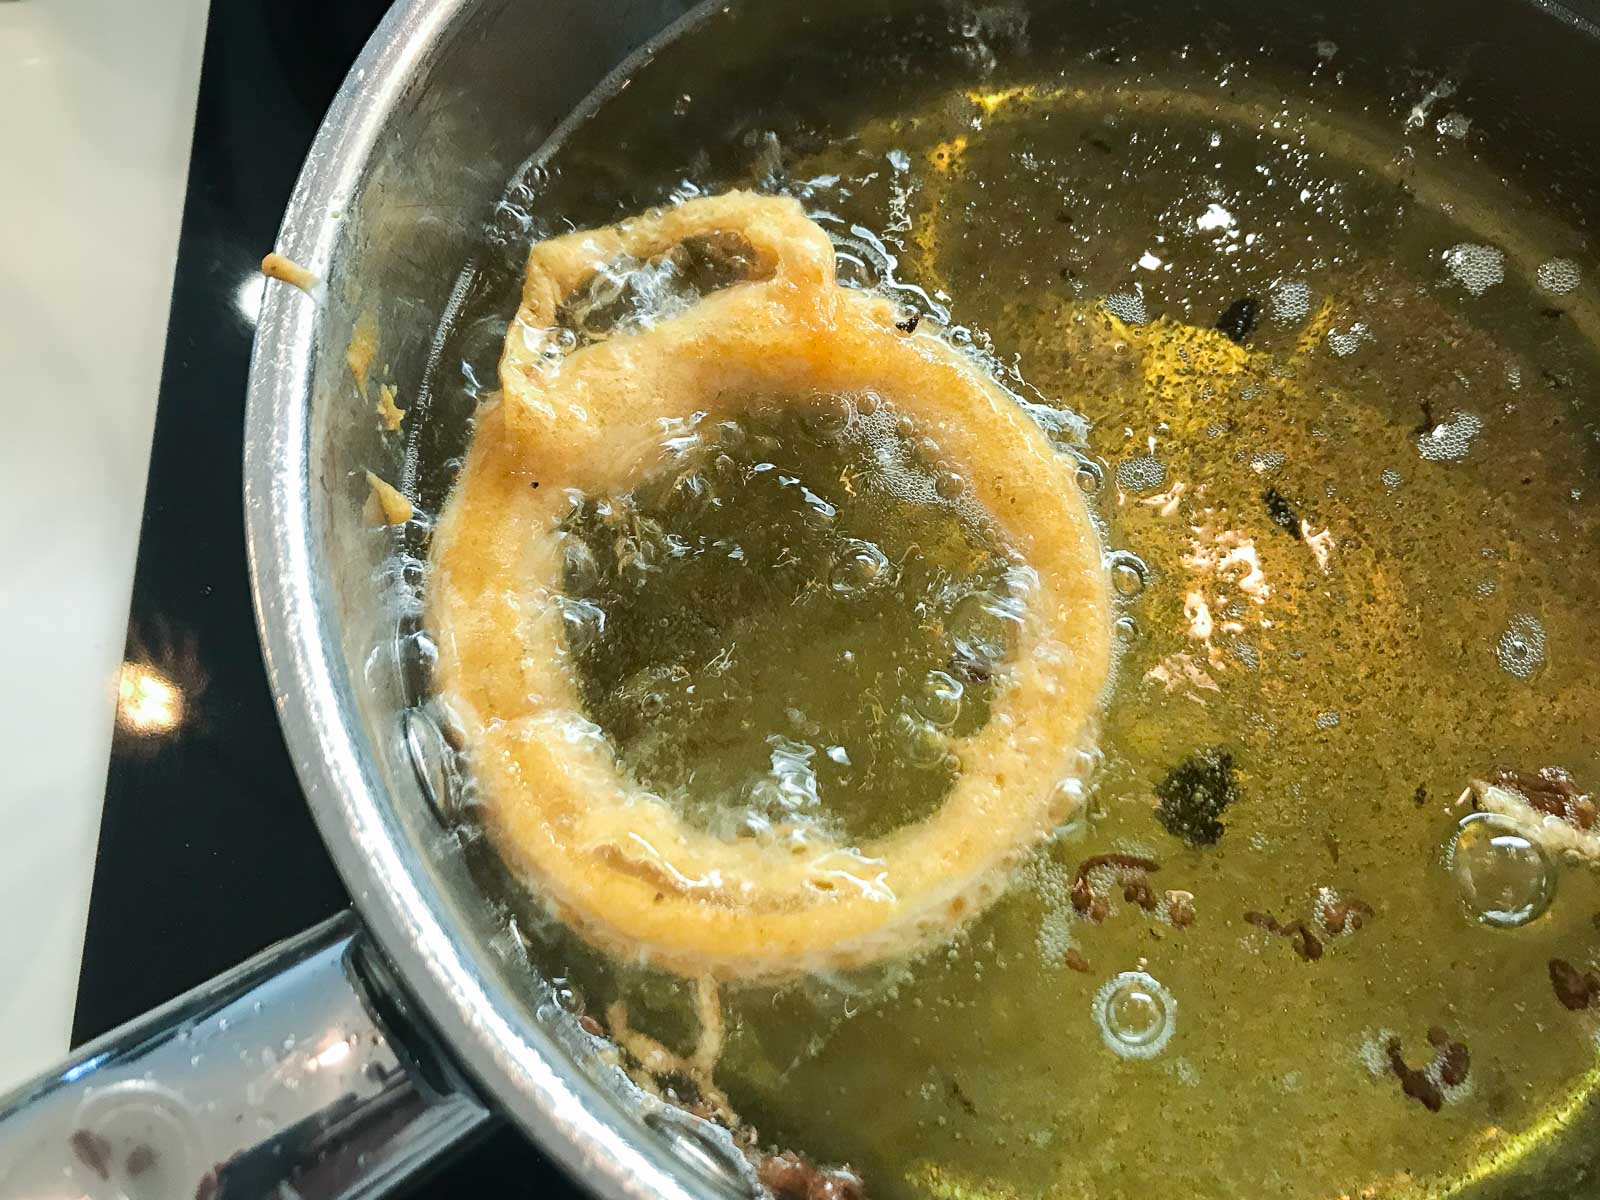 An onion ring frying in oil in a pan.